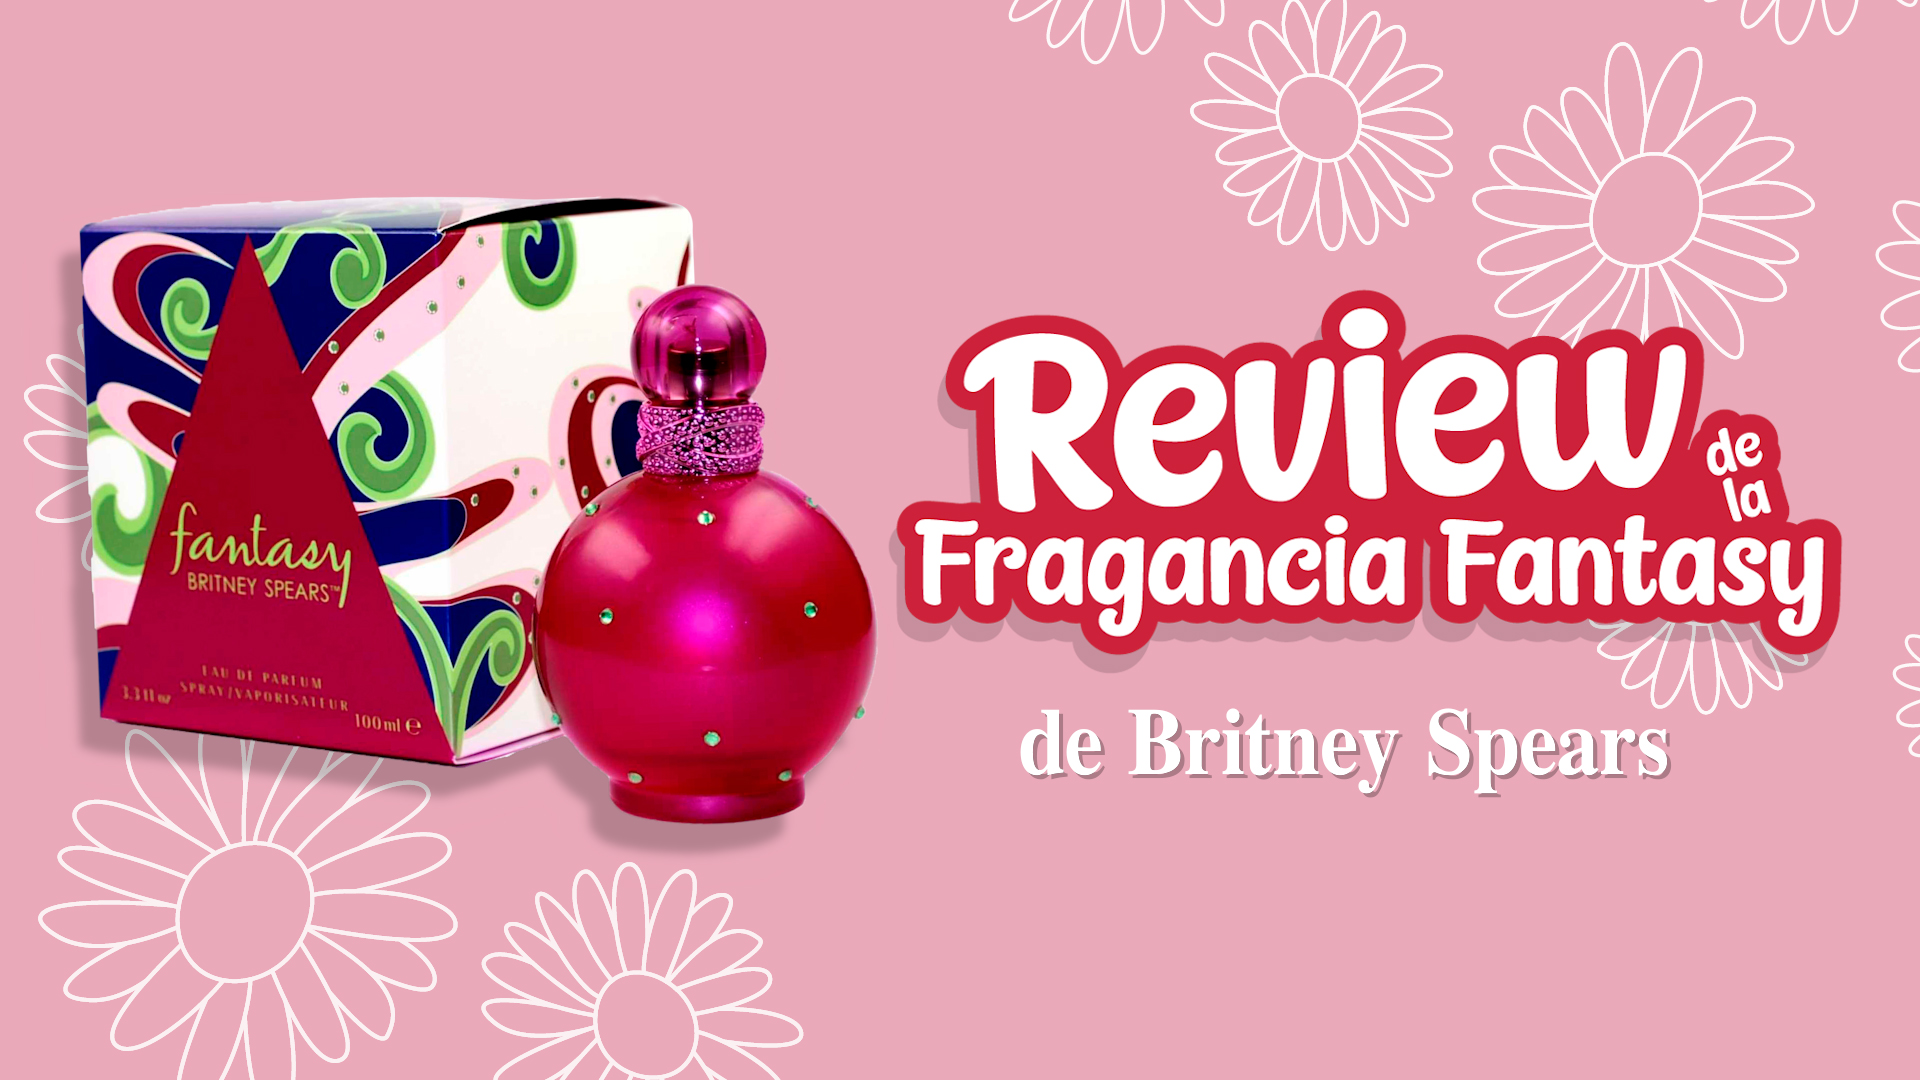 Perfume de Britney Spears Fantasy